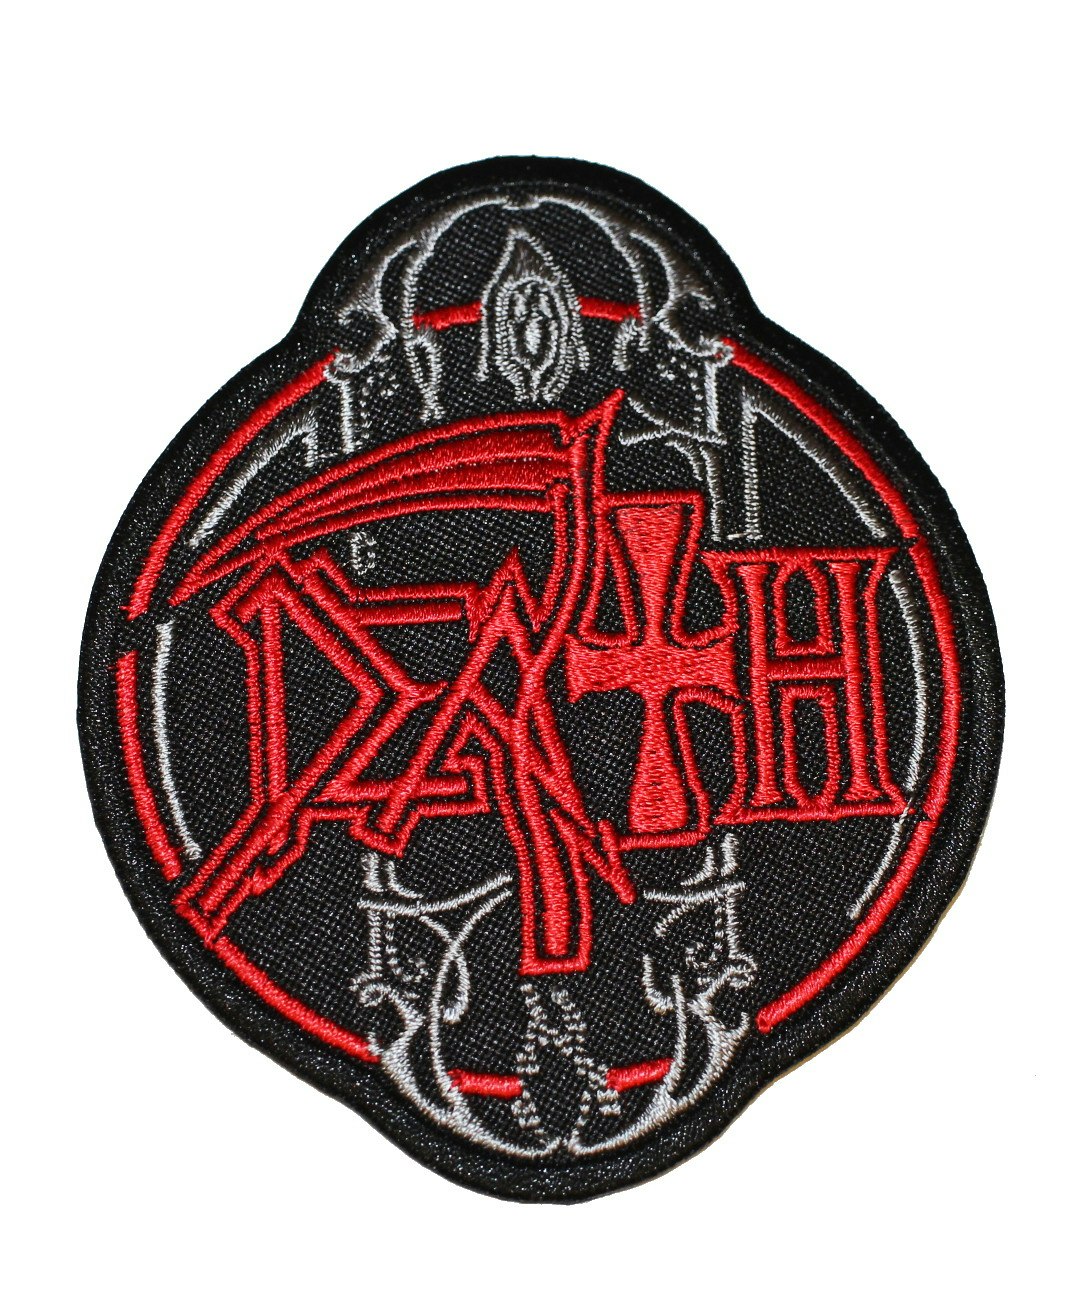 Death logo patch